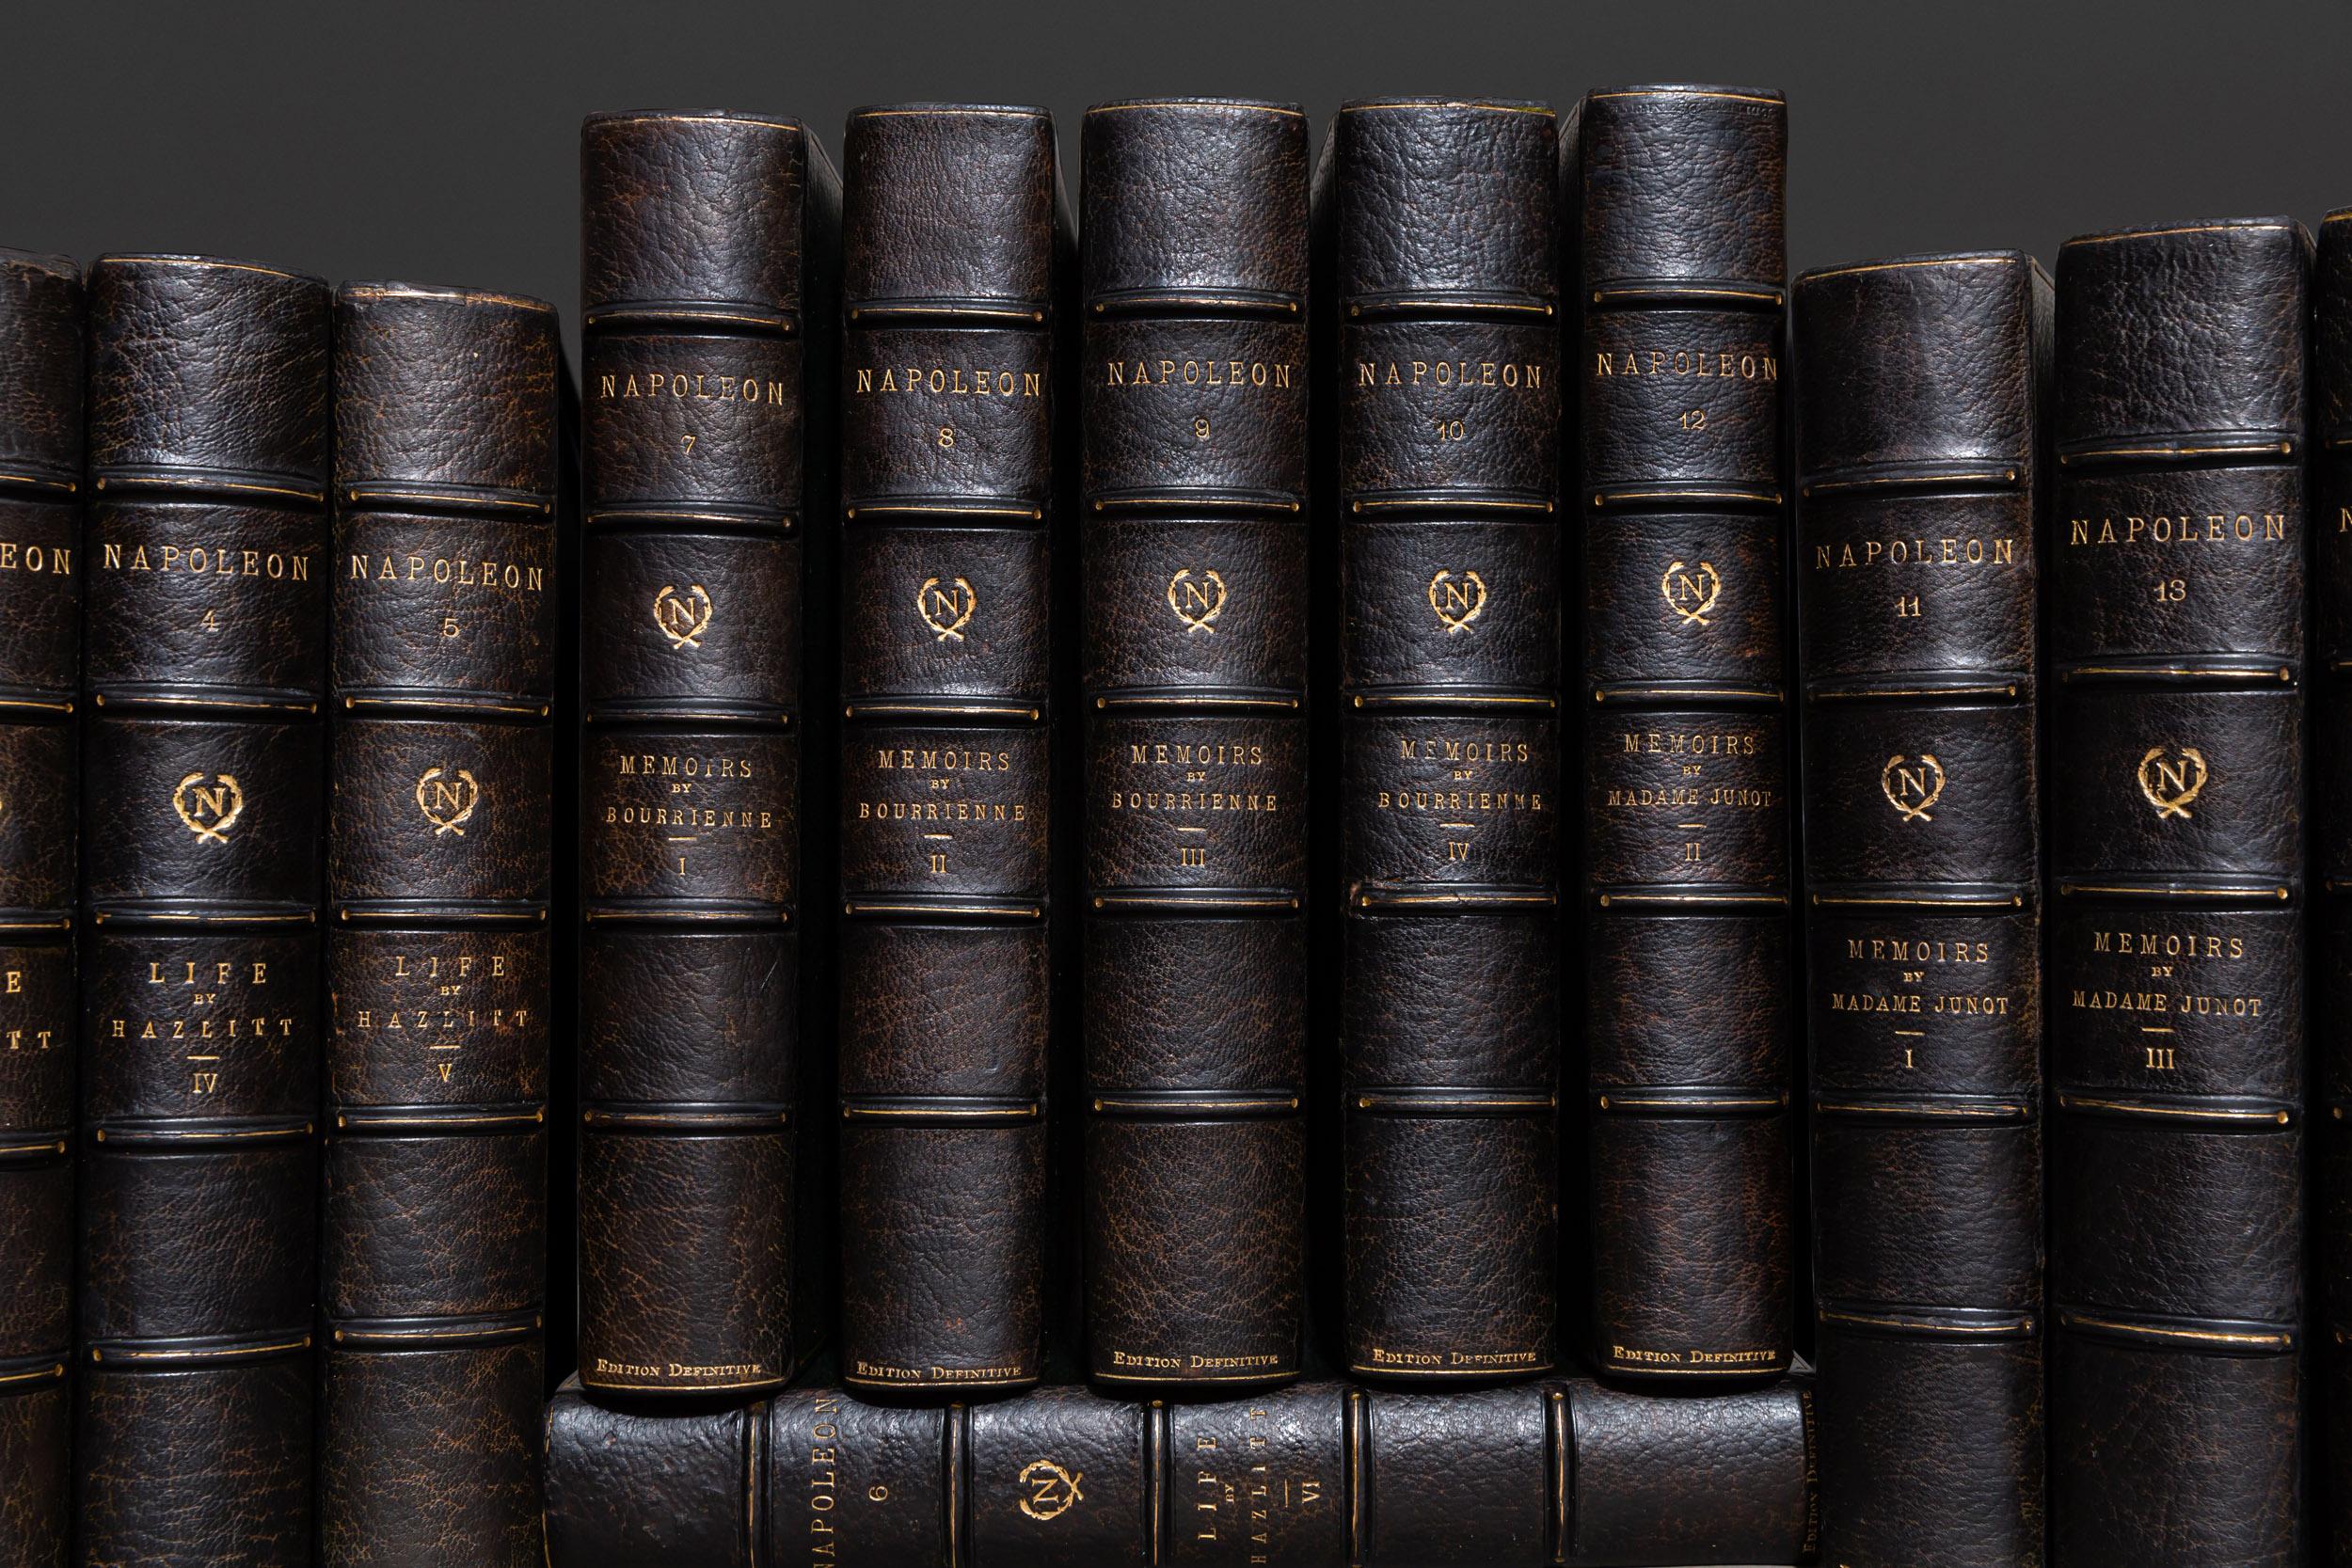 French 'Napoleon' Hazlitt, Junot & Bourrienne, Memoirs and Life of Napoleon